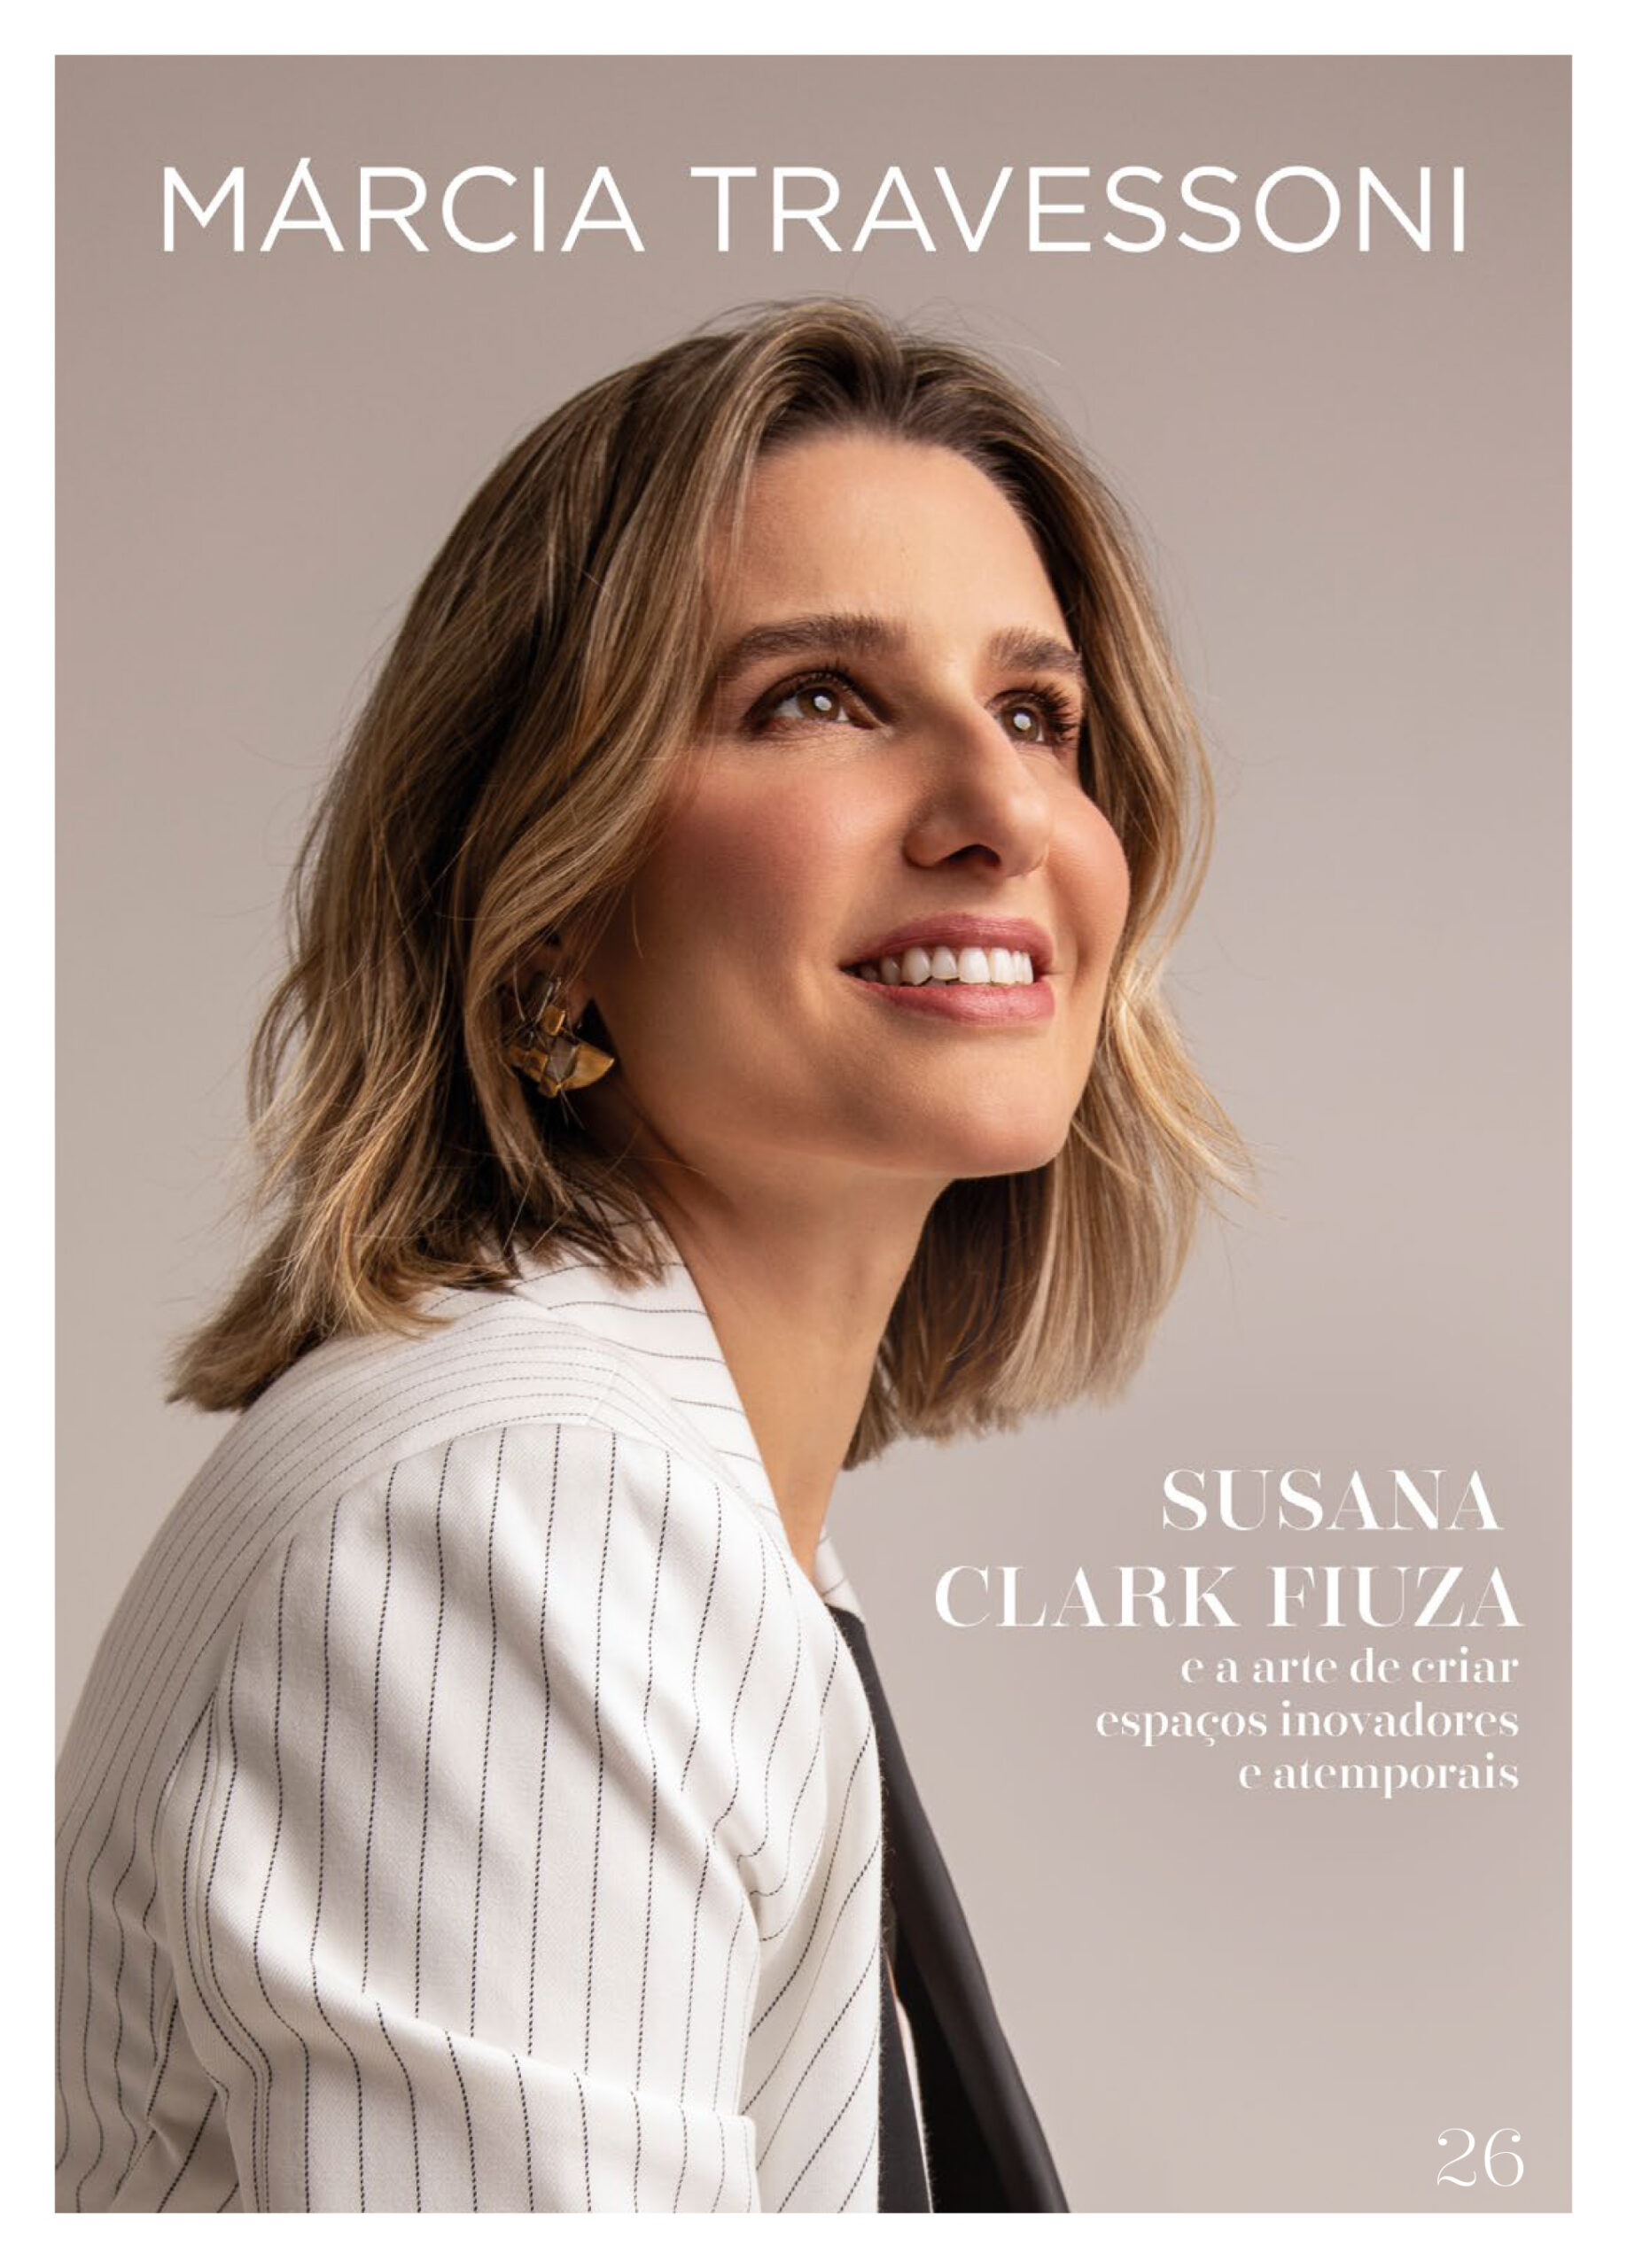 Revista Márcia Travessoni ed. 26: Susana Clark Fiuza